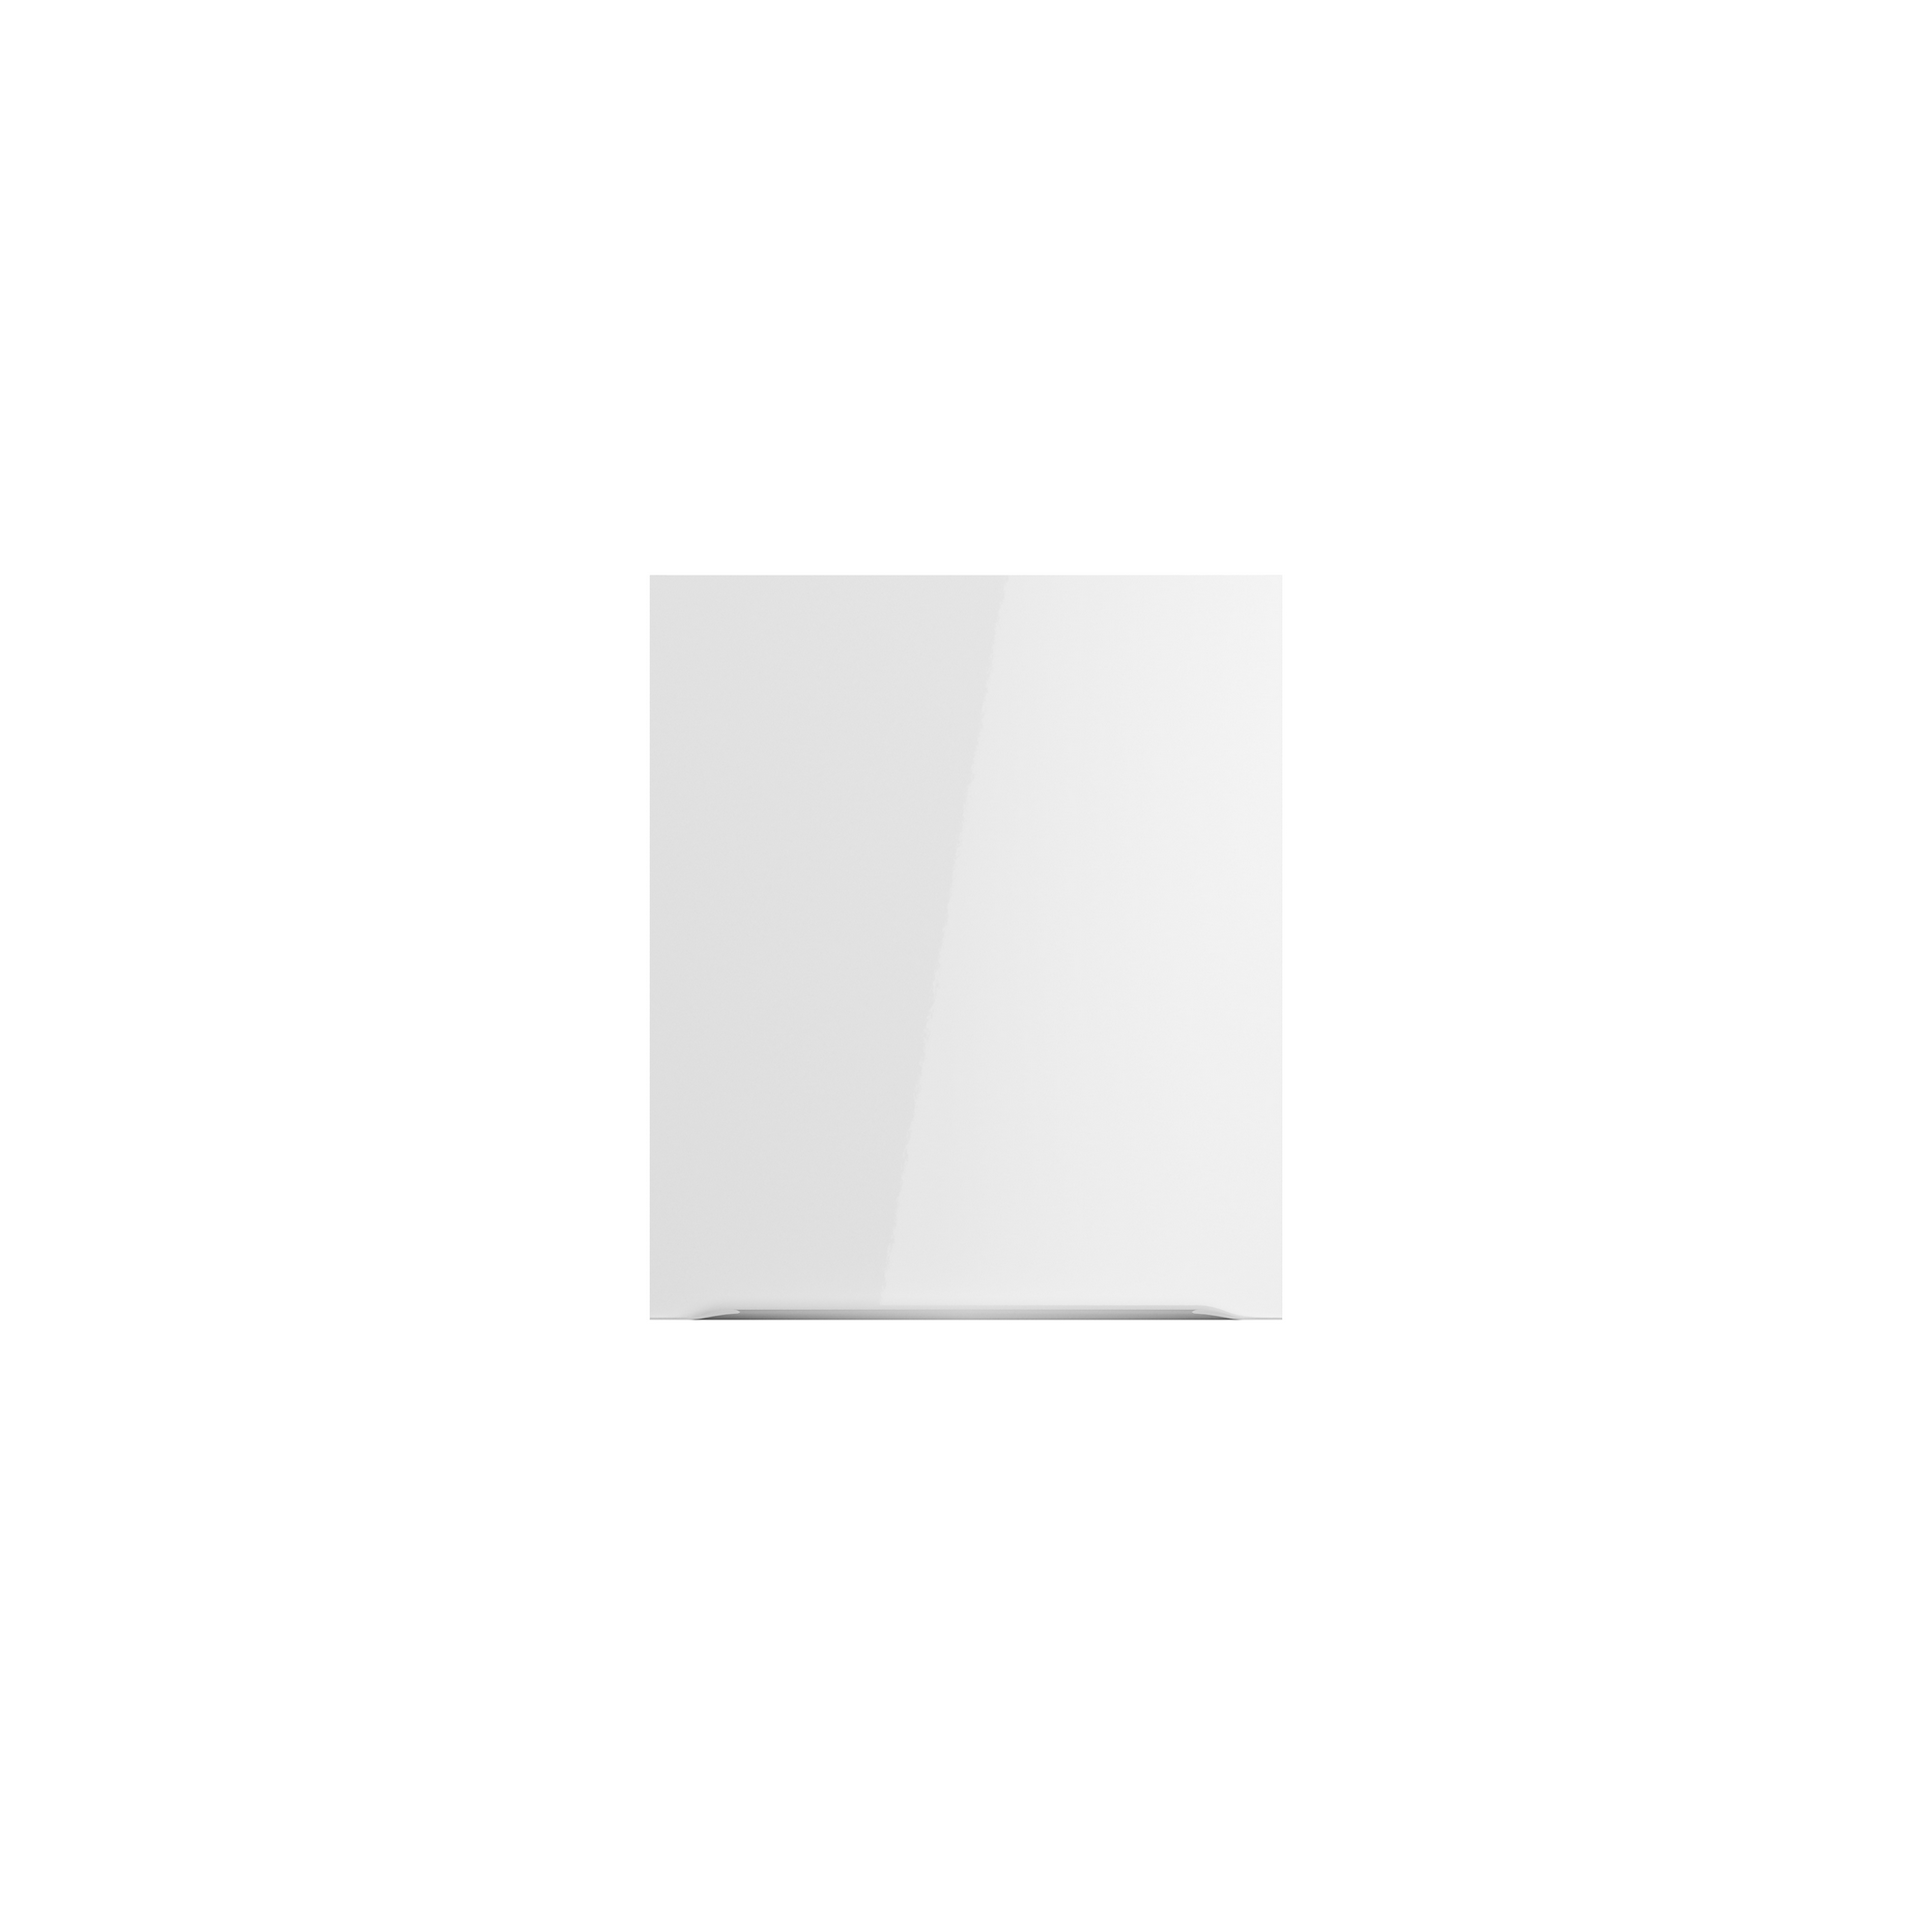 Oberschrank 'Optikomfort Arvid986' weiß 60 x 70,4 x 34,9 cm + product picture